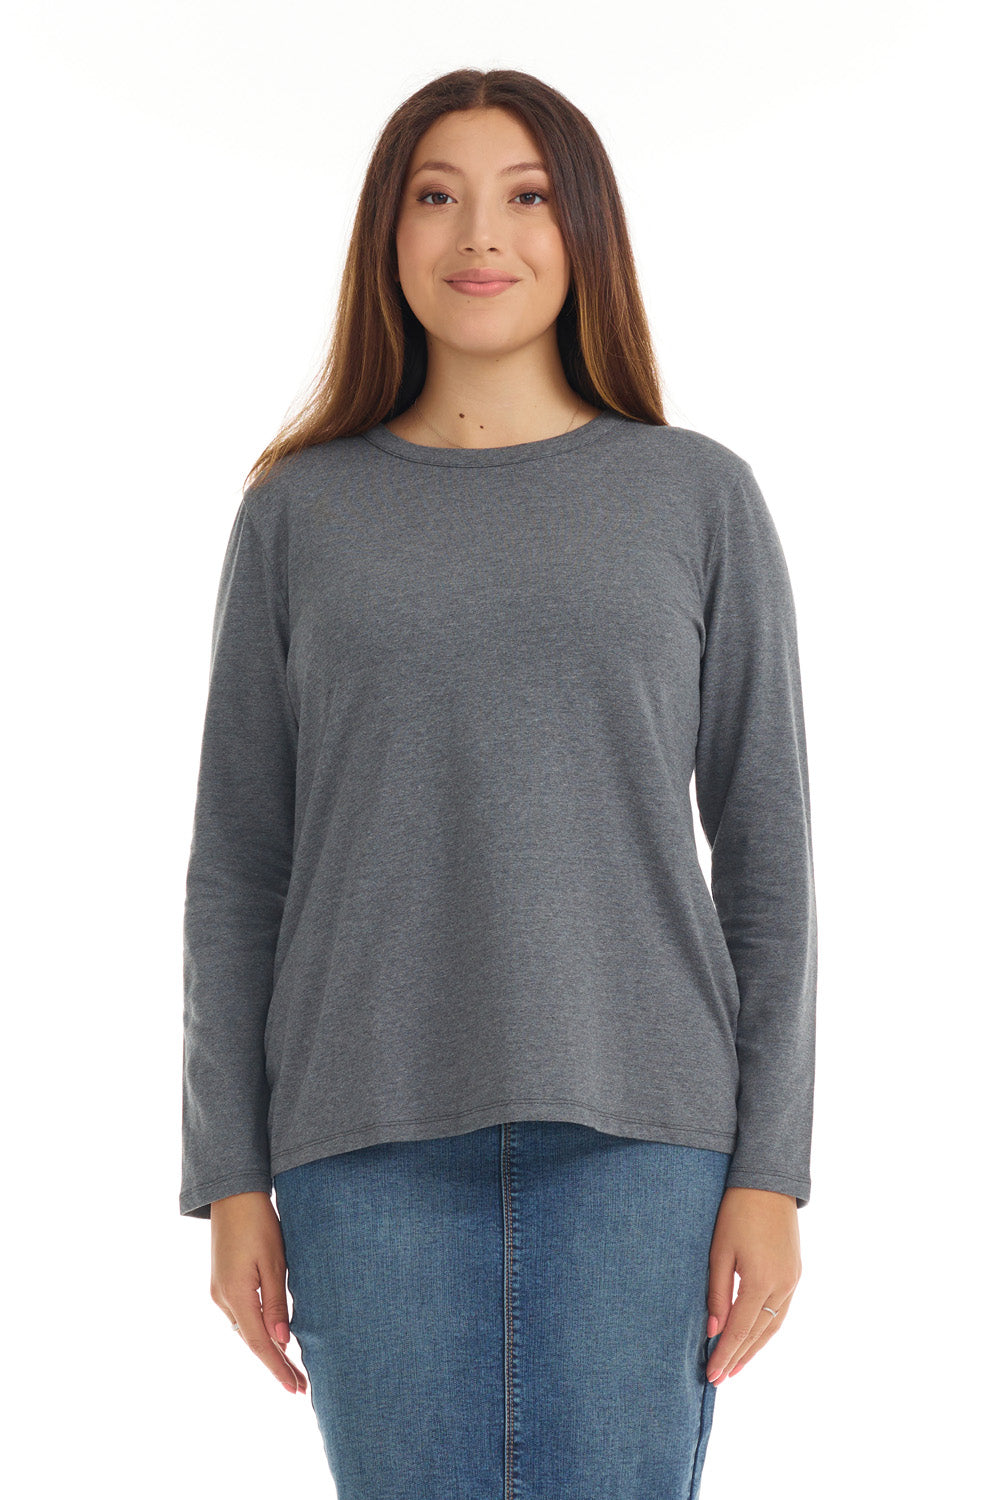 dark gray basic loose cotton shirt for women 